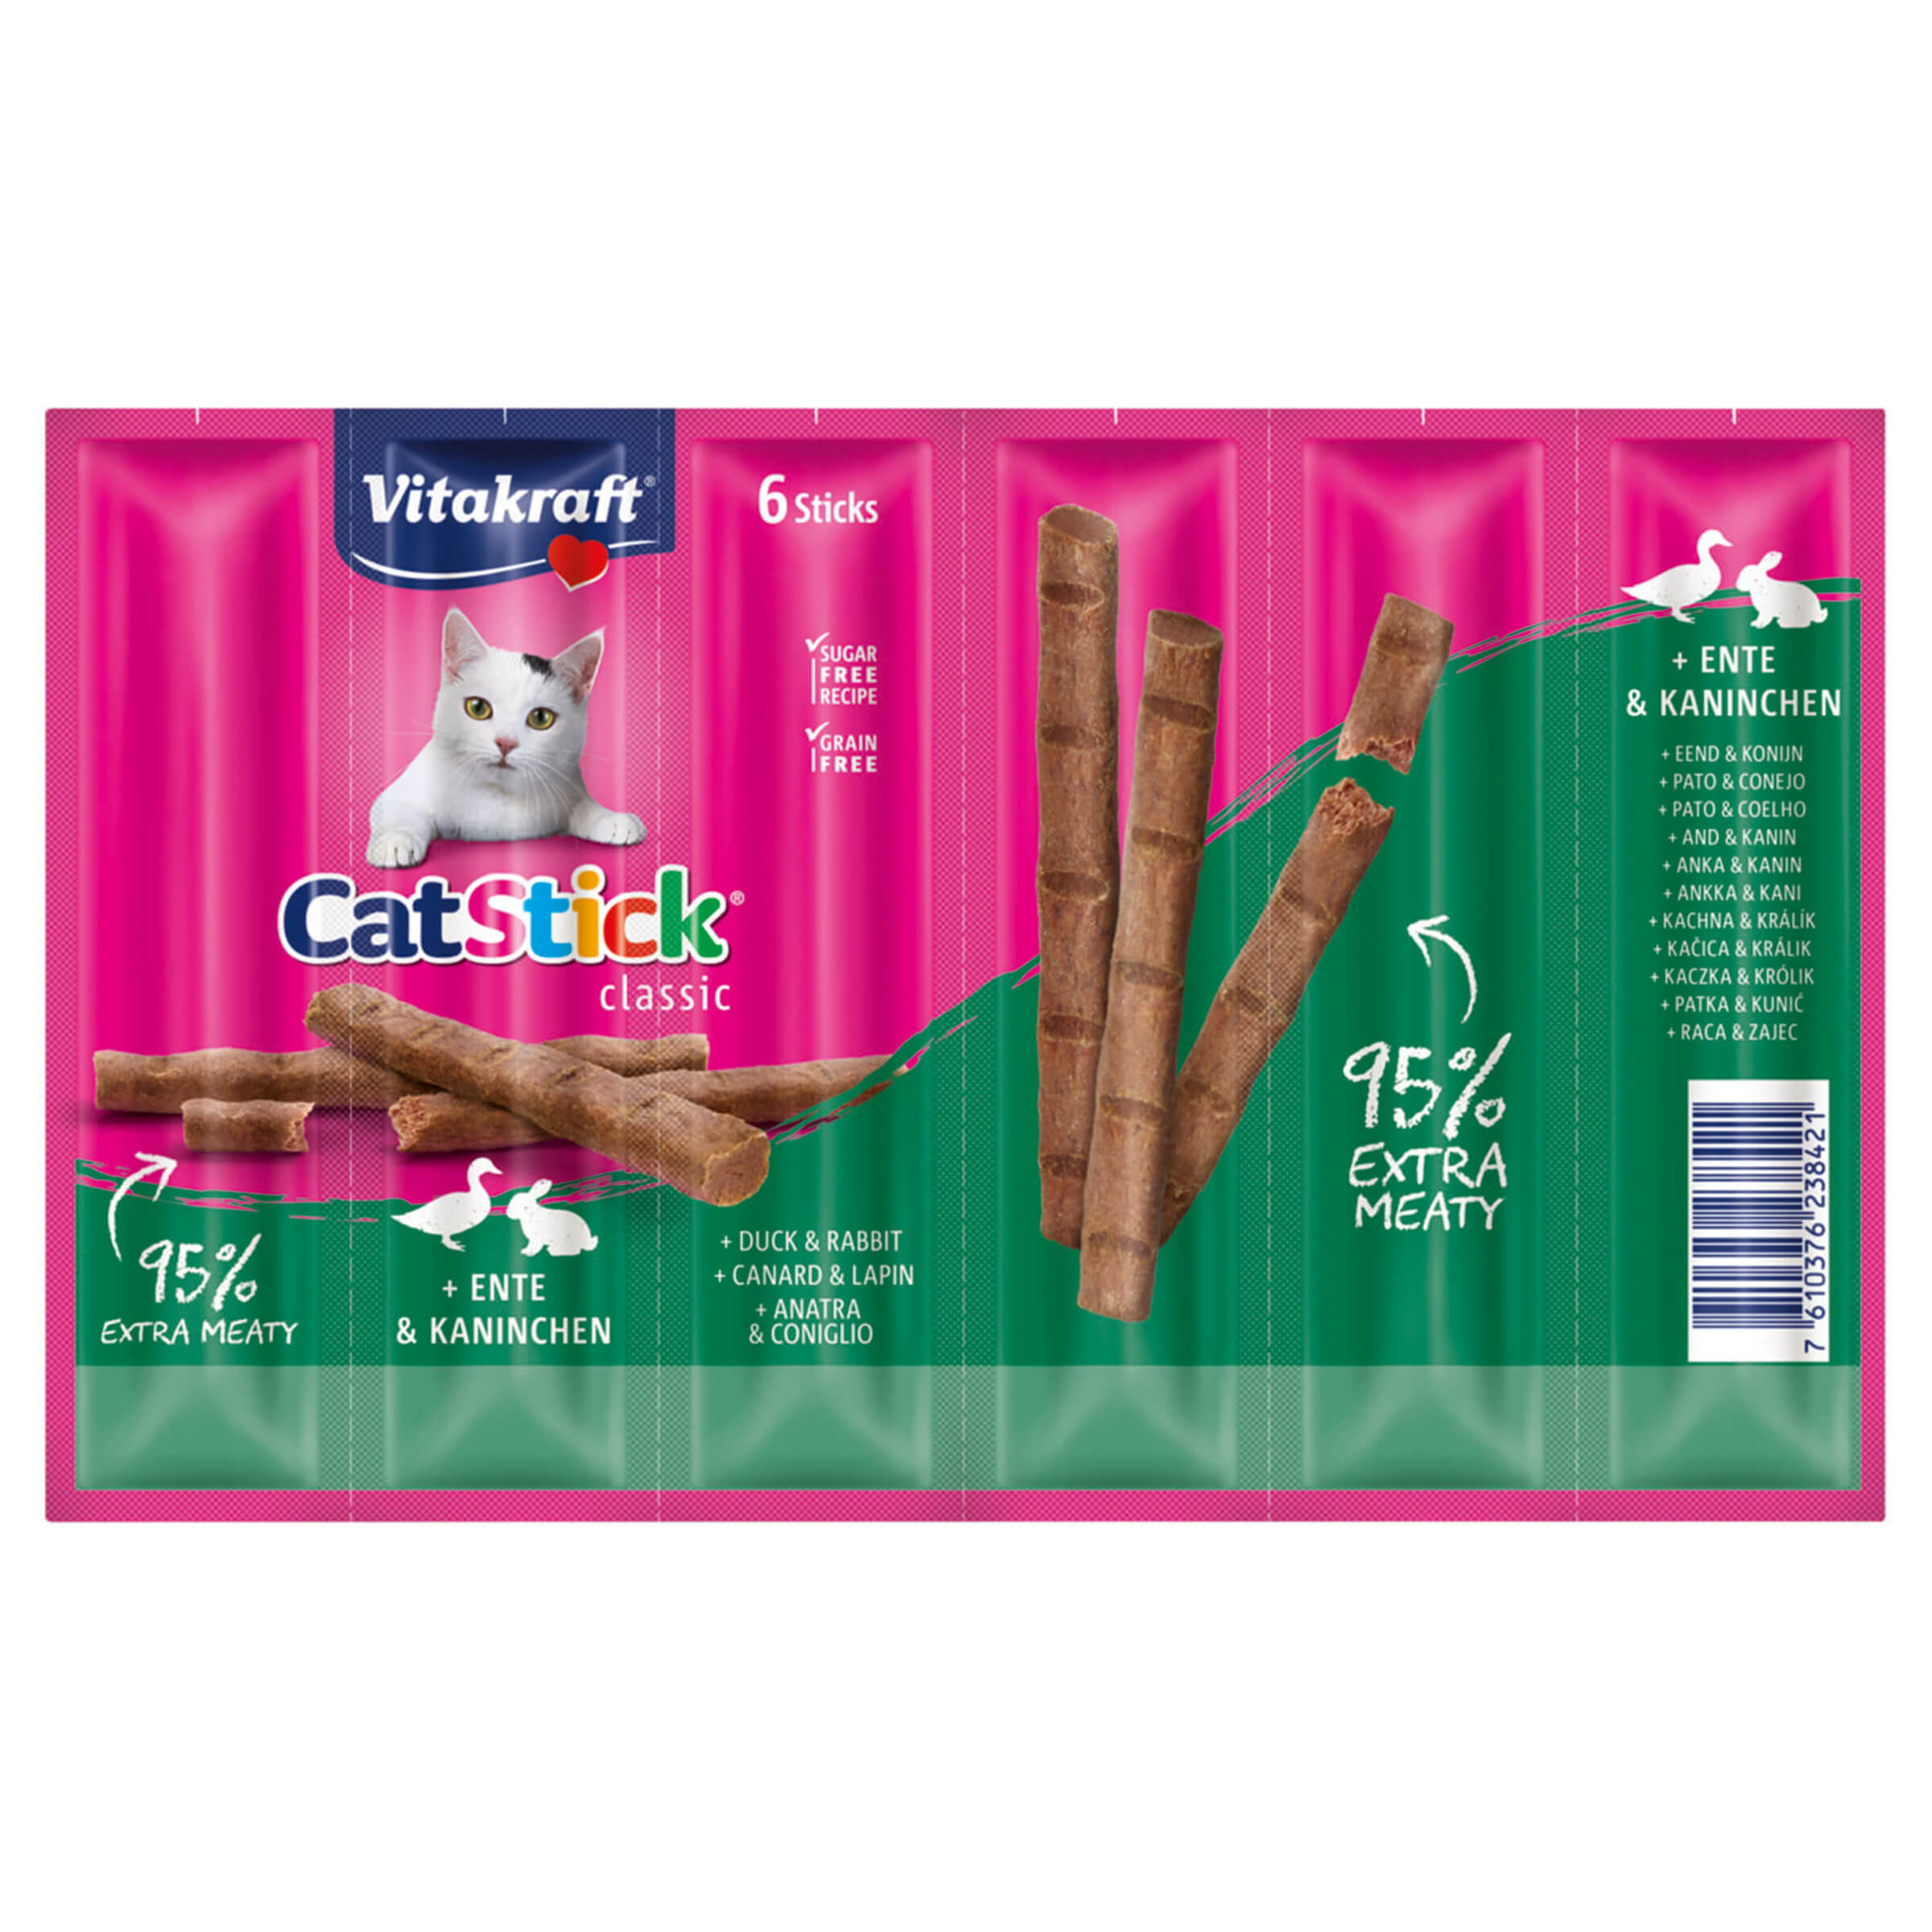 20 + 4 gratis! 24 x 6 g Vitakraft Cat Stick - Classic: Ente & Kaninchen